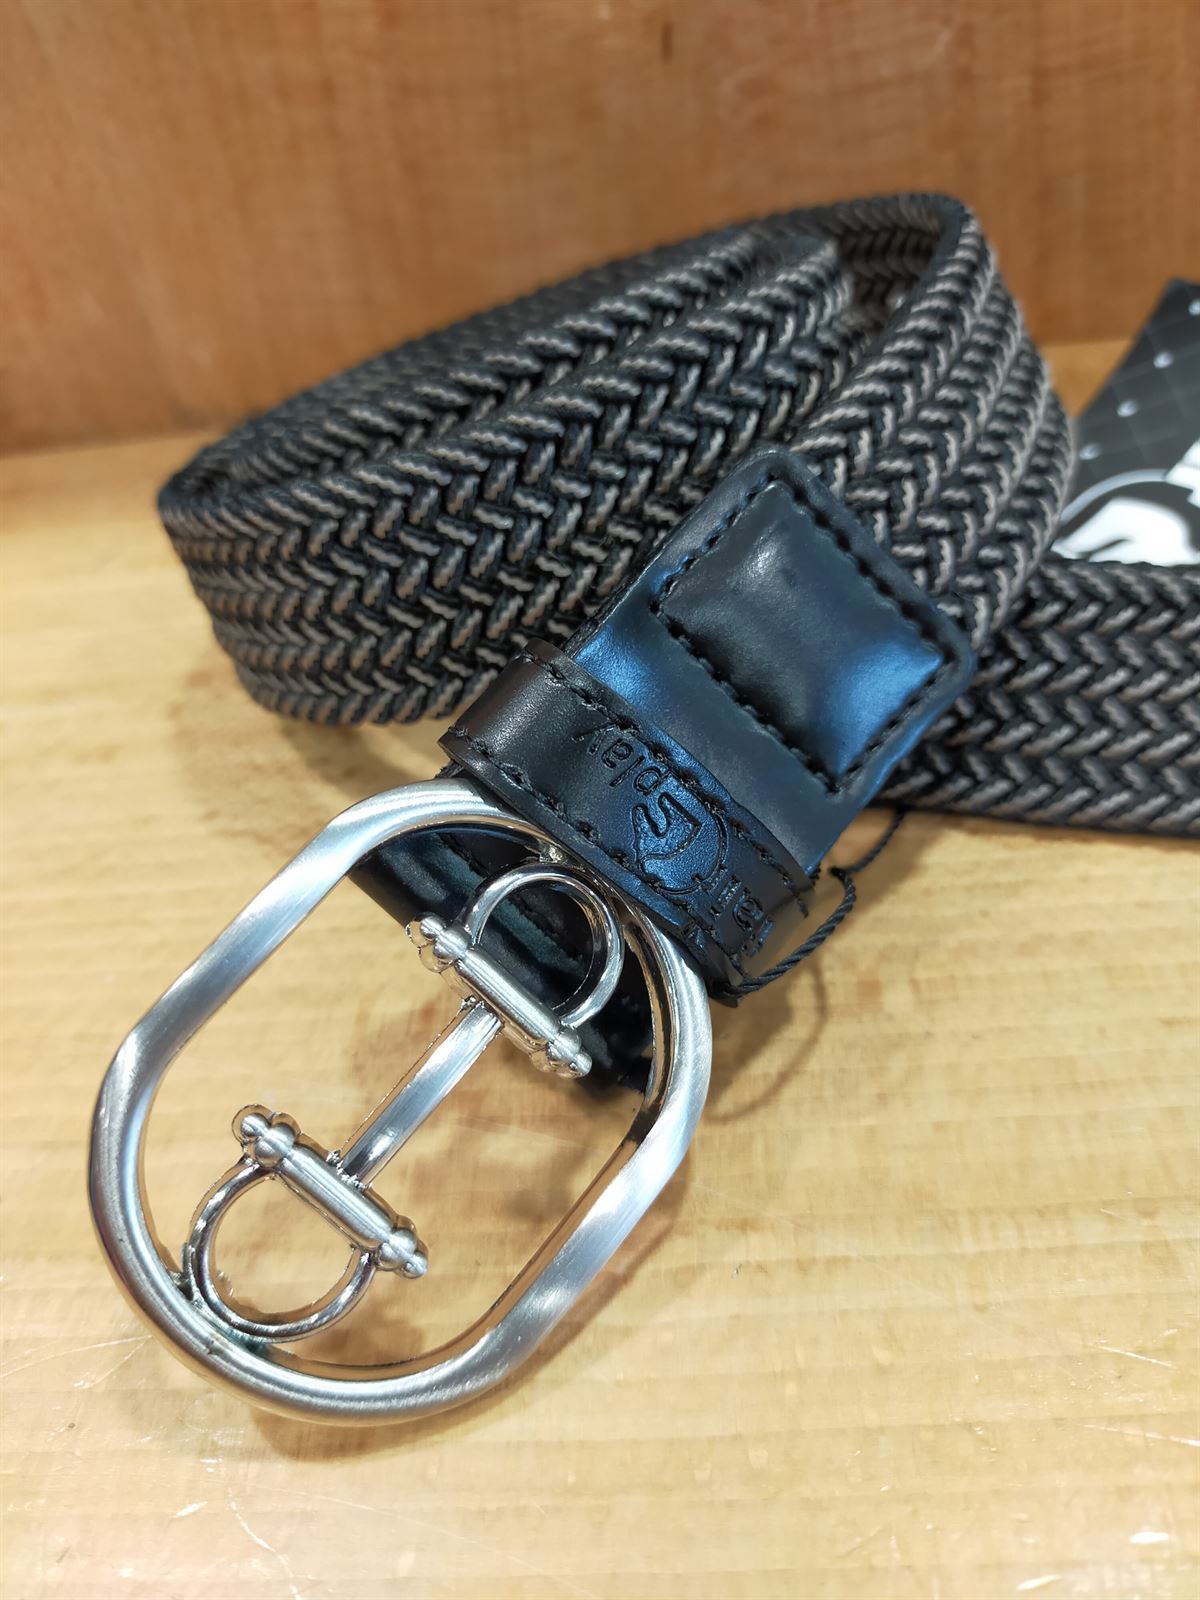 Cinturón elástico FAIR PLAY Valley color taupe/negro talla S/M - Imagen 1